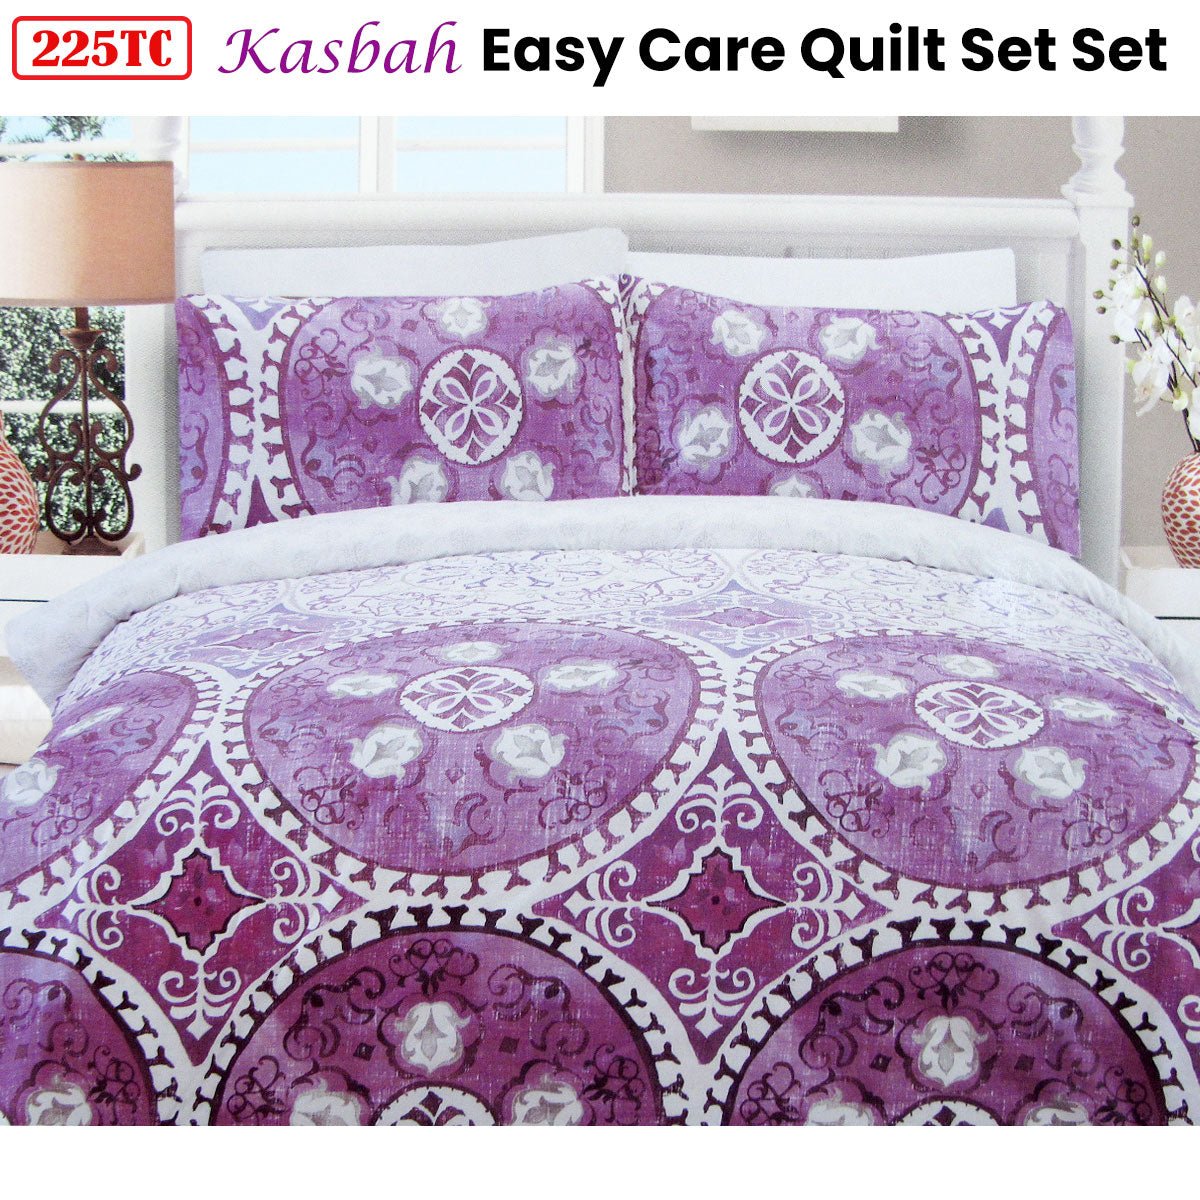 225TC Kasbah Mandala Cotton Rich Easy Care Quilt Cover Set Queen - Newstart Furniture